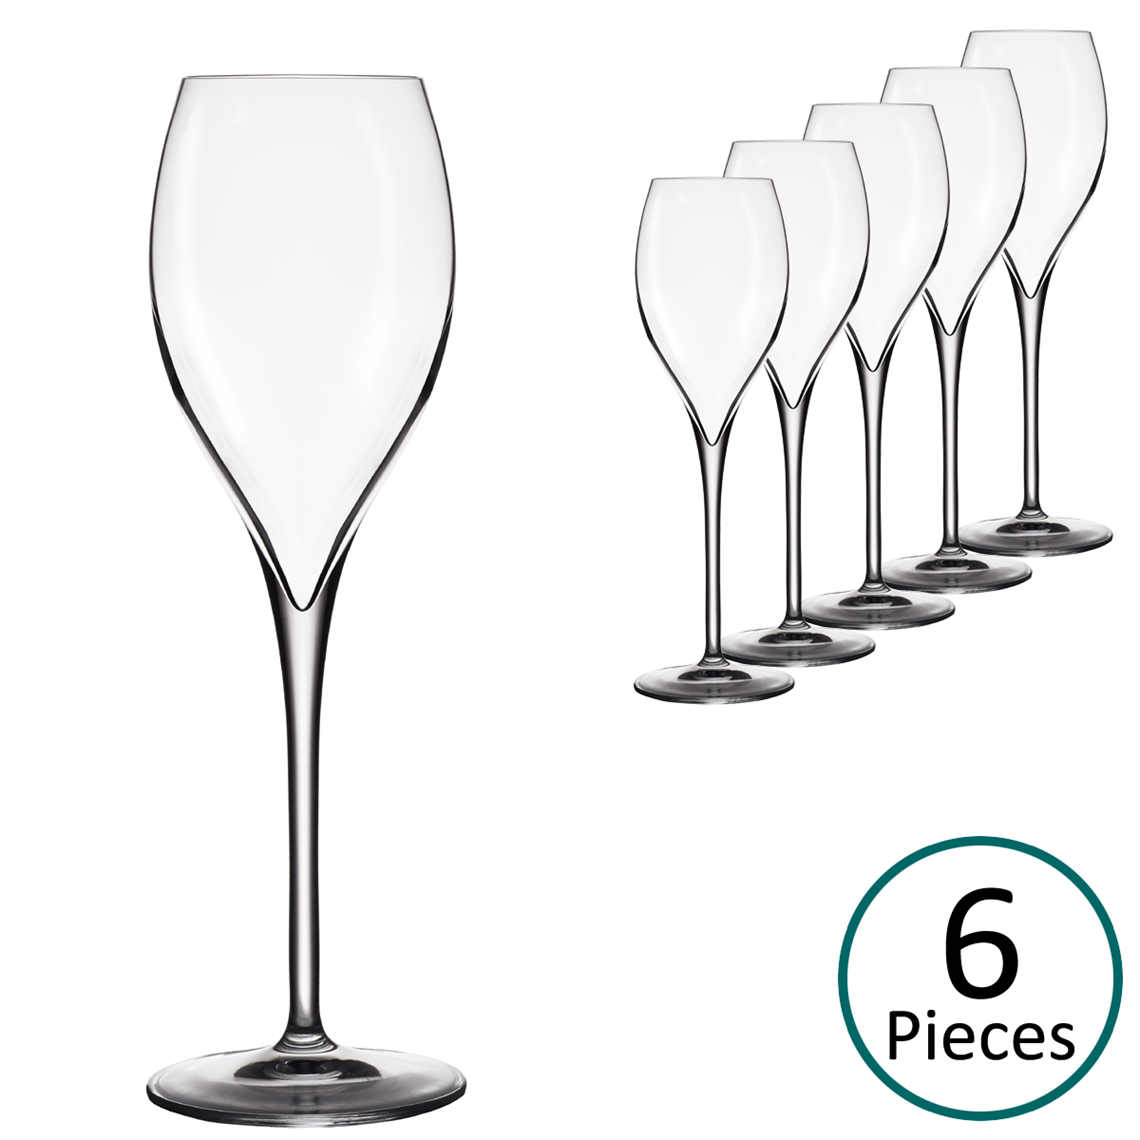 Lehmann Glass Opale Champagne / Sparkling Wine Glass 210ml - Set of 6